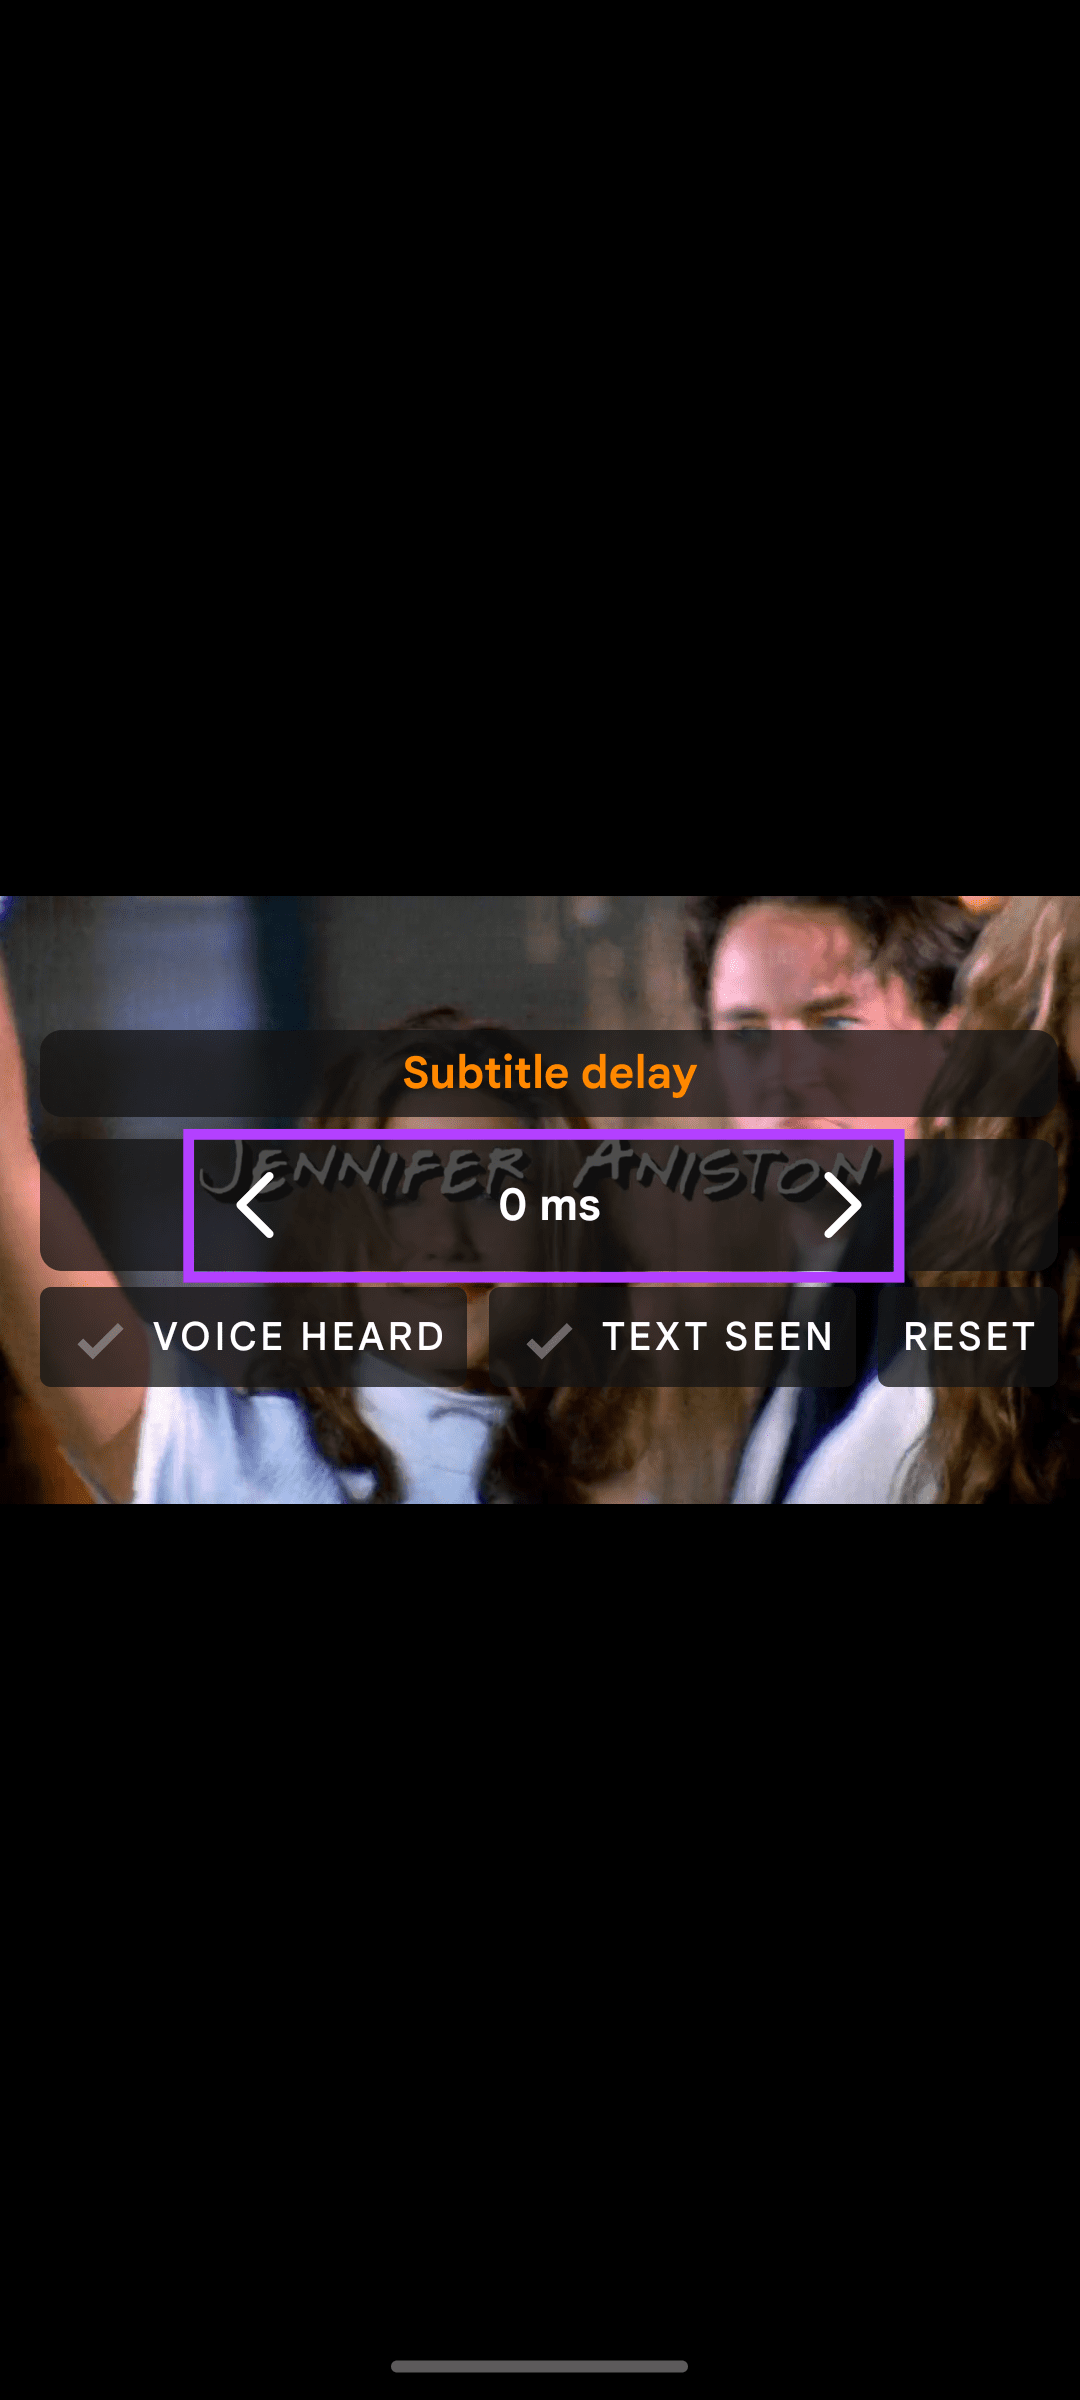 adjust the subtitle delay